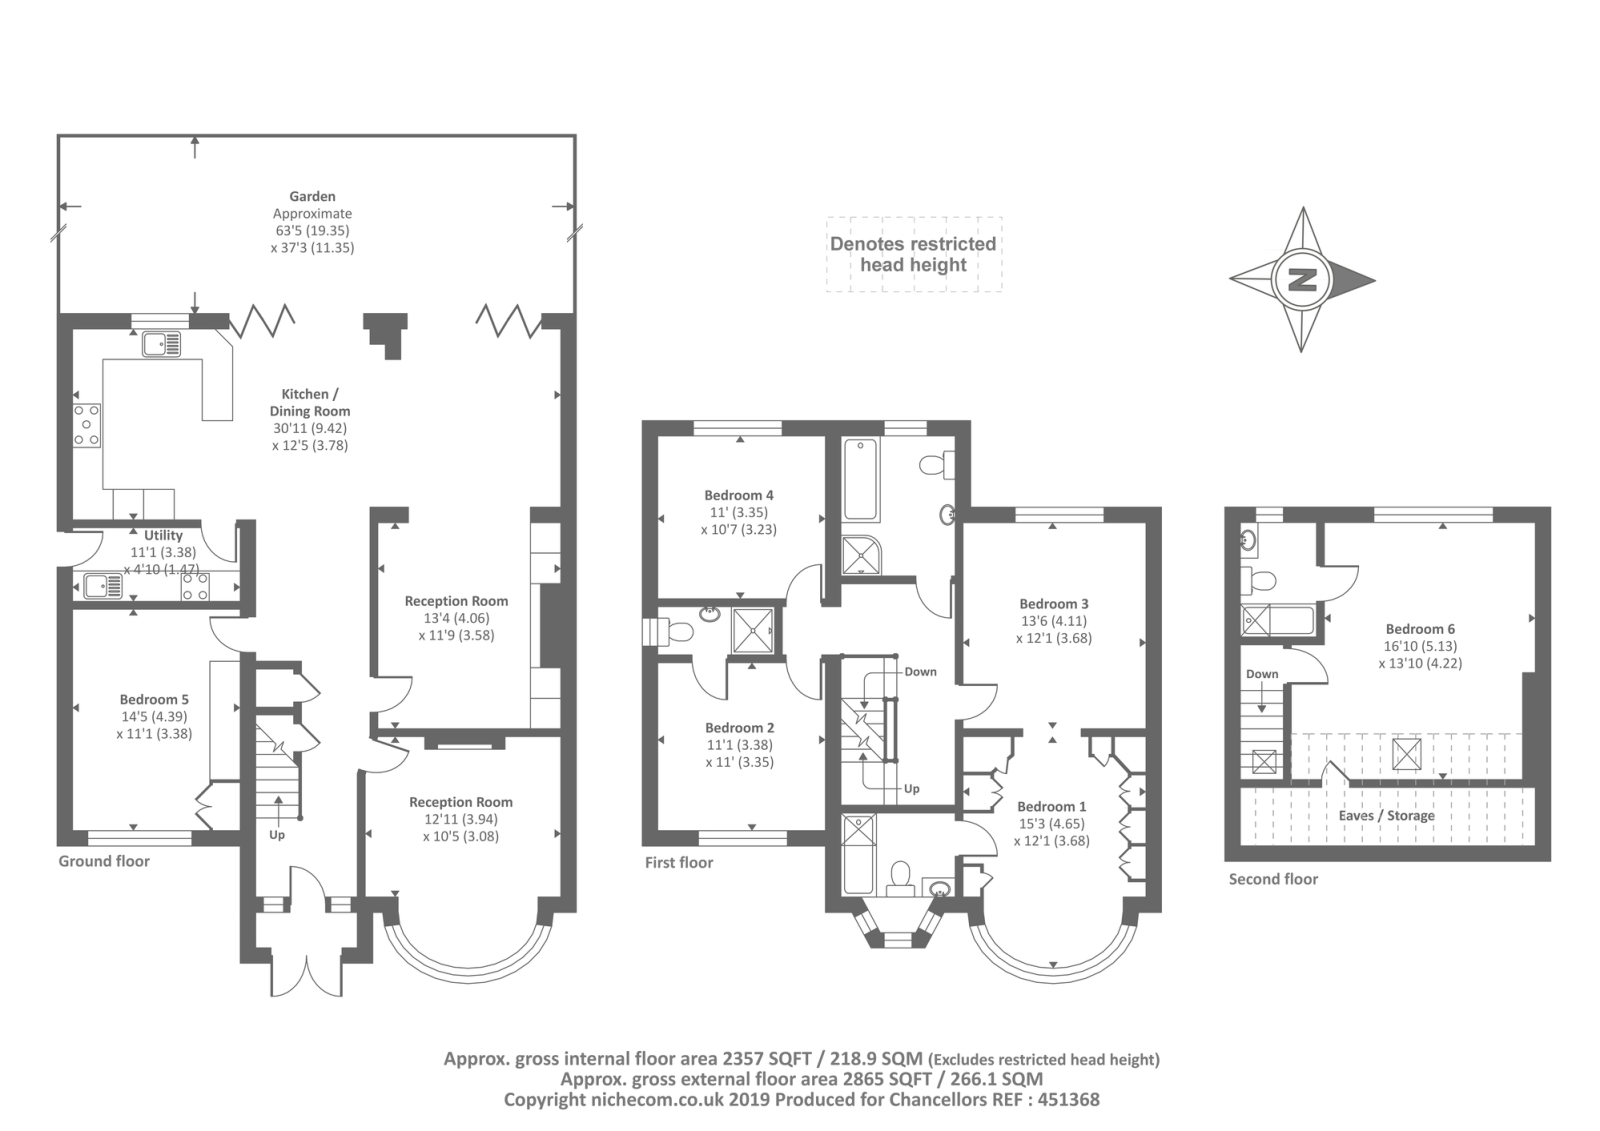 5 Bedrooms Semi-detached house to rent in Whitton, Twickenham TW2